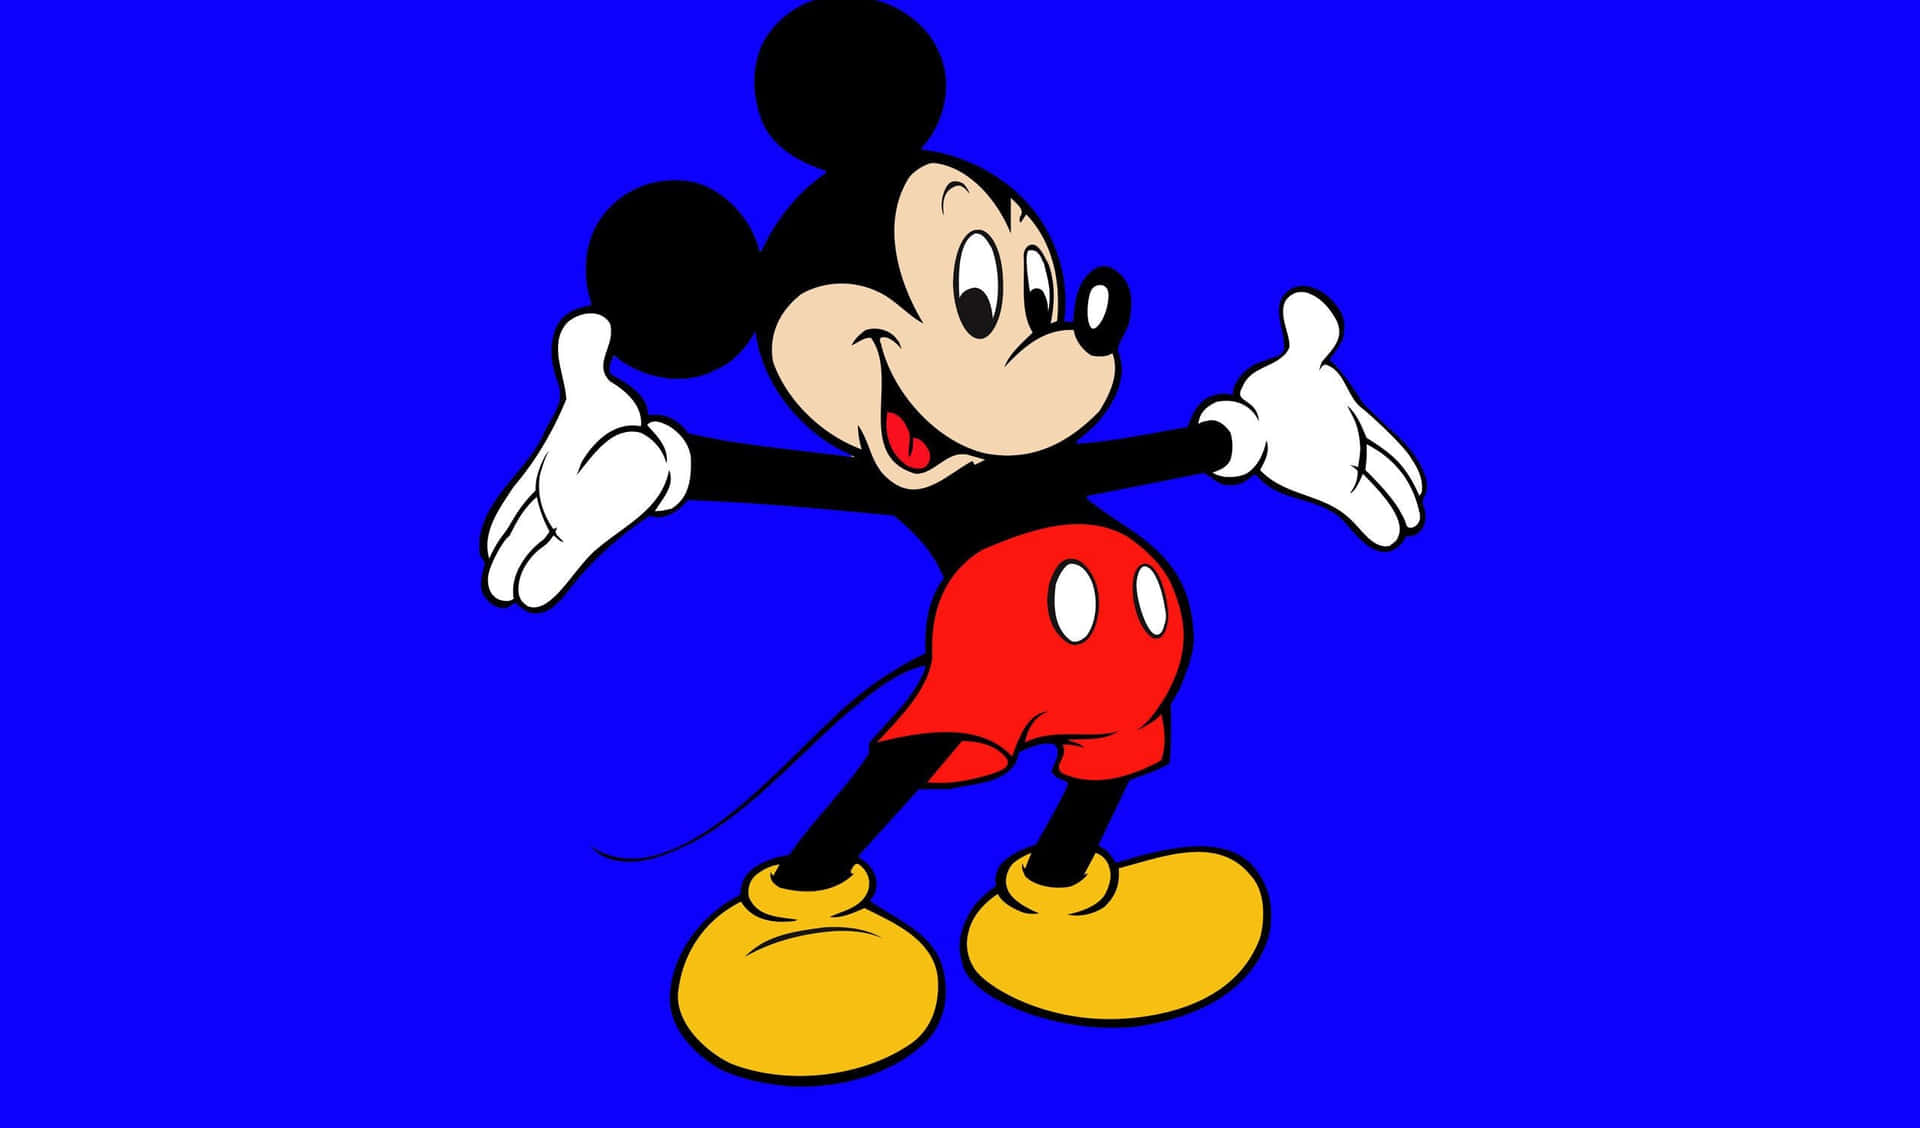 Mickeymouse, Den Ikoniske Tegnefilmsfigur Fra Walt Disney.